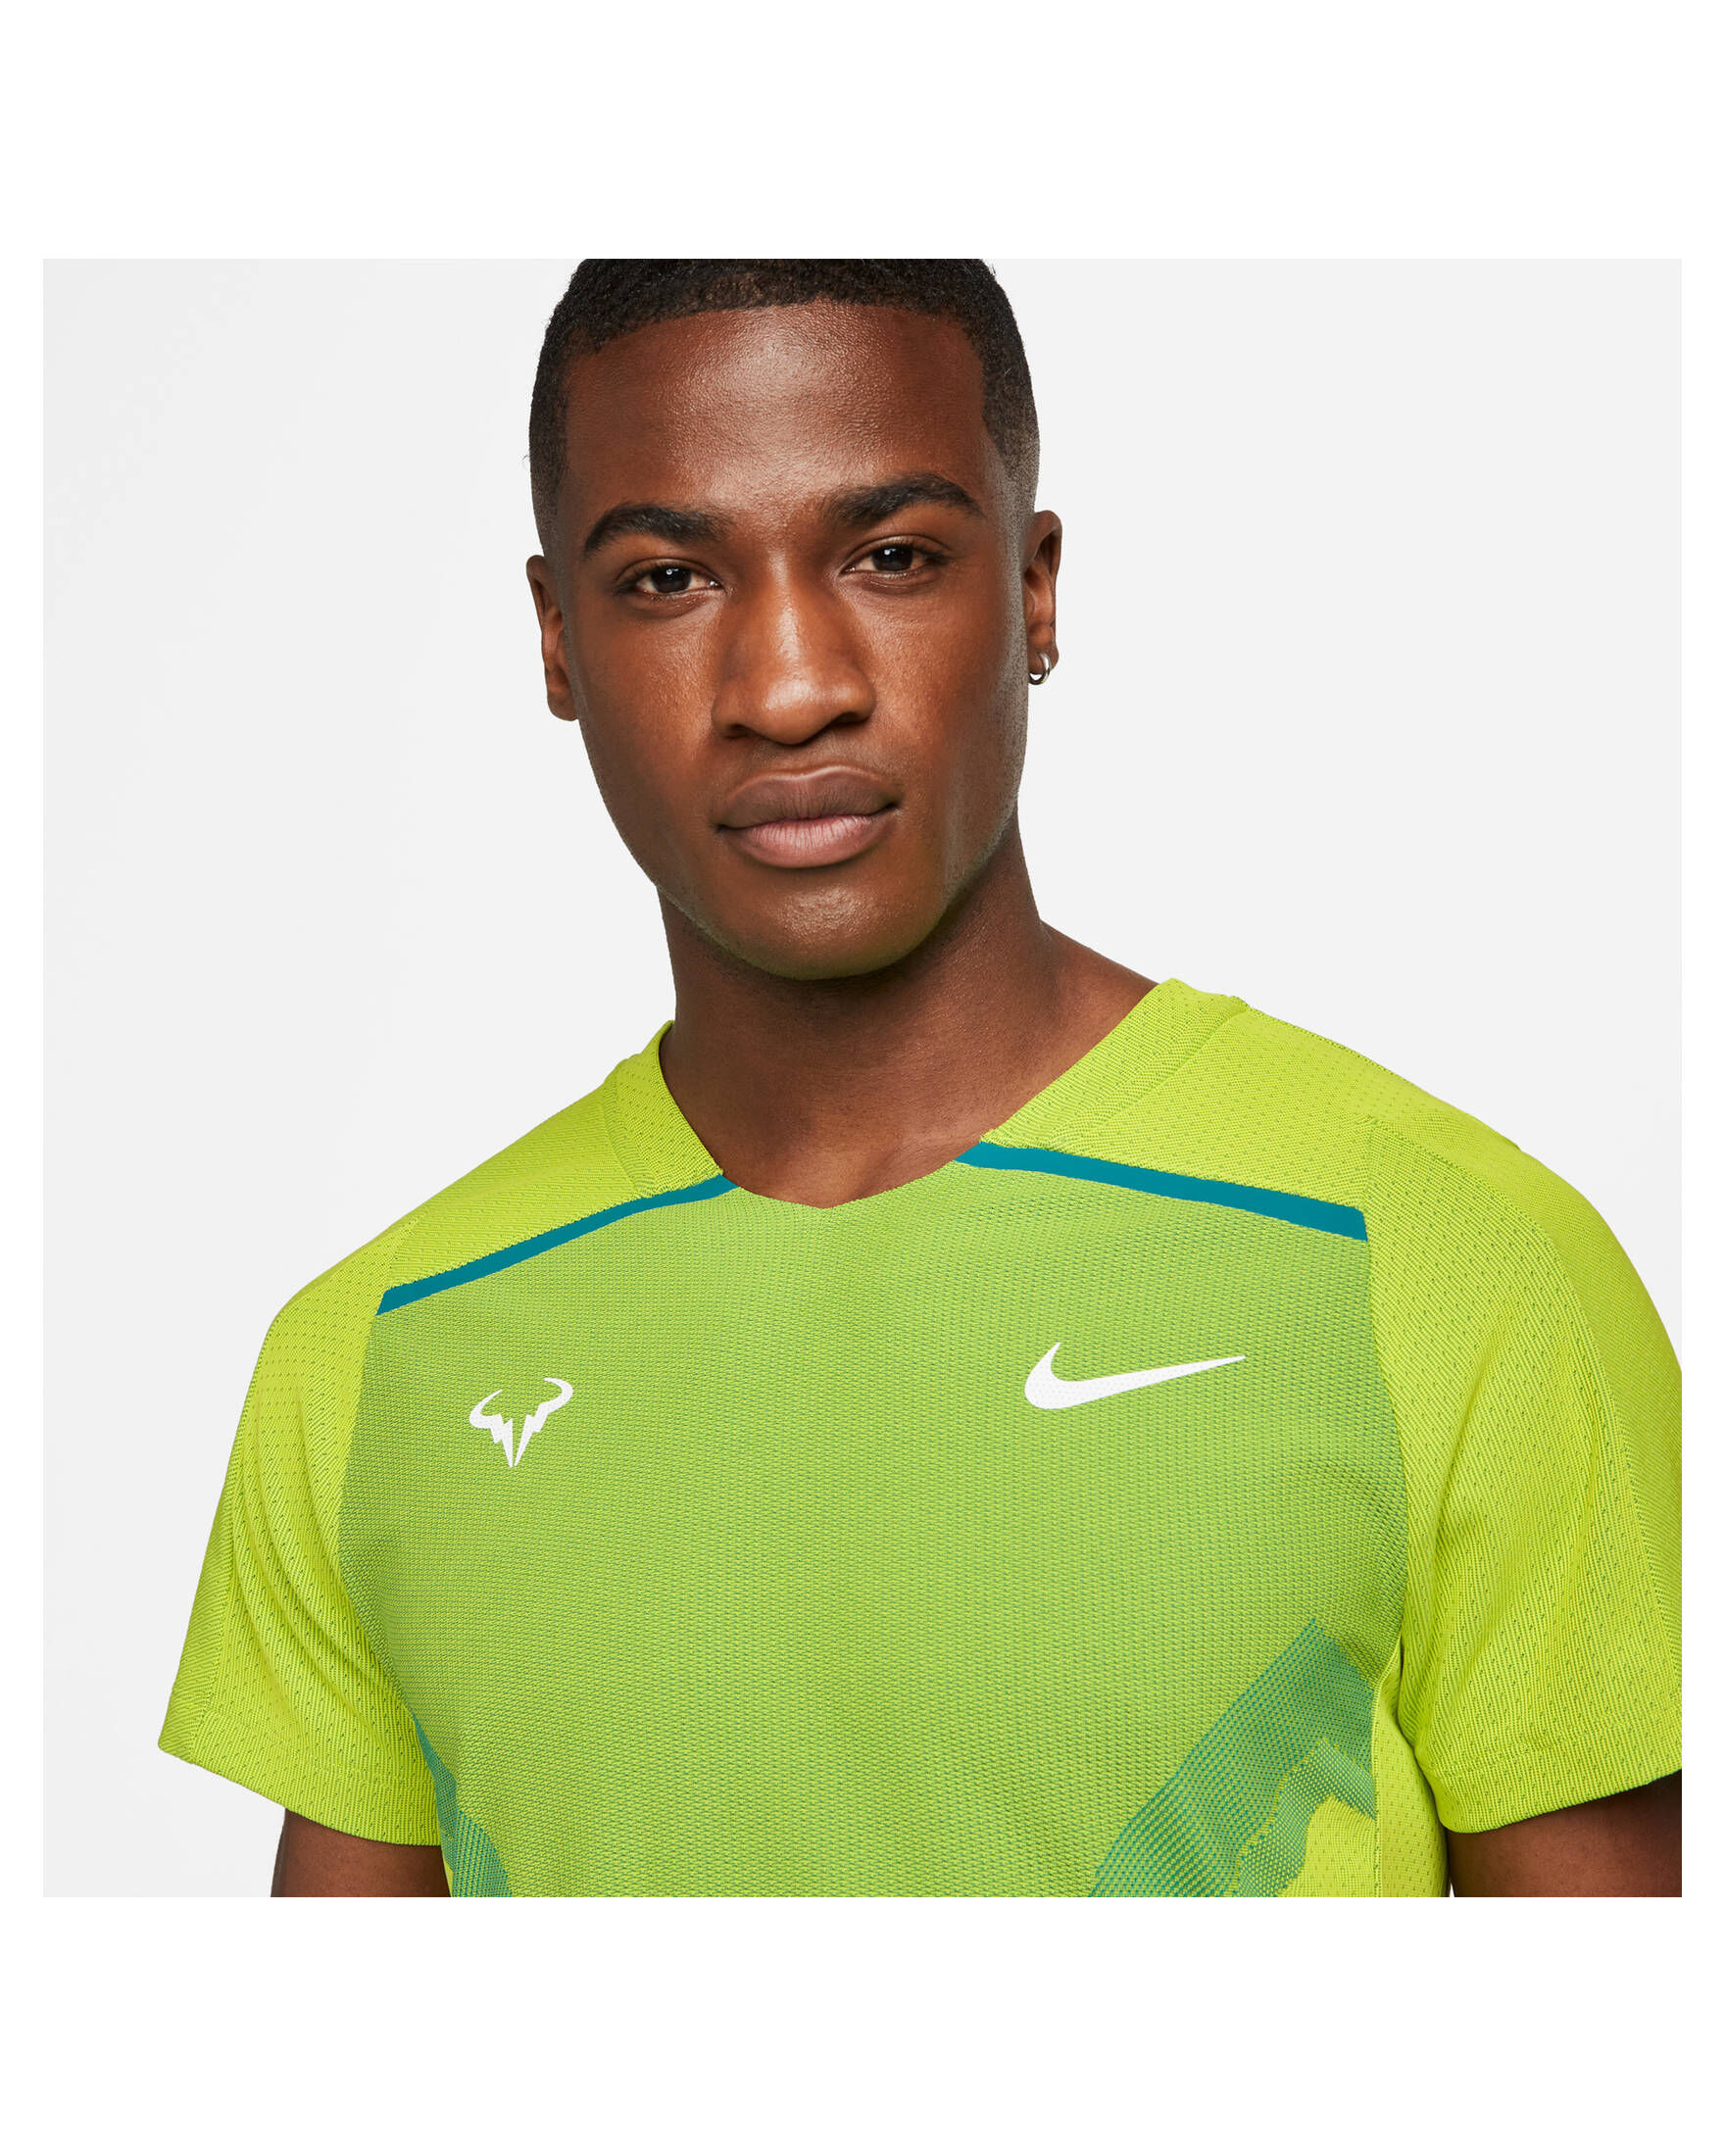 Nike Herren Tennisshirt DRI-FIT ADV kaufen |